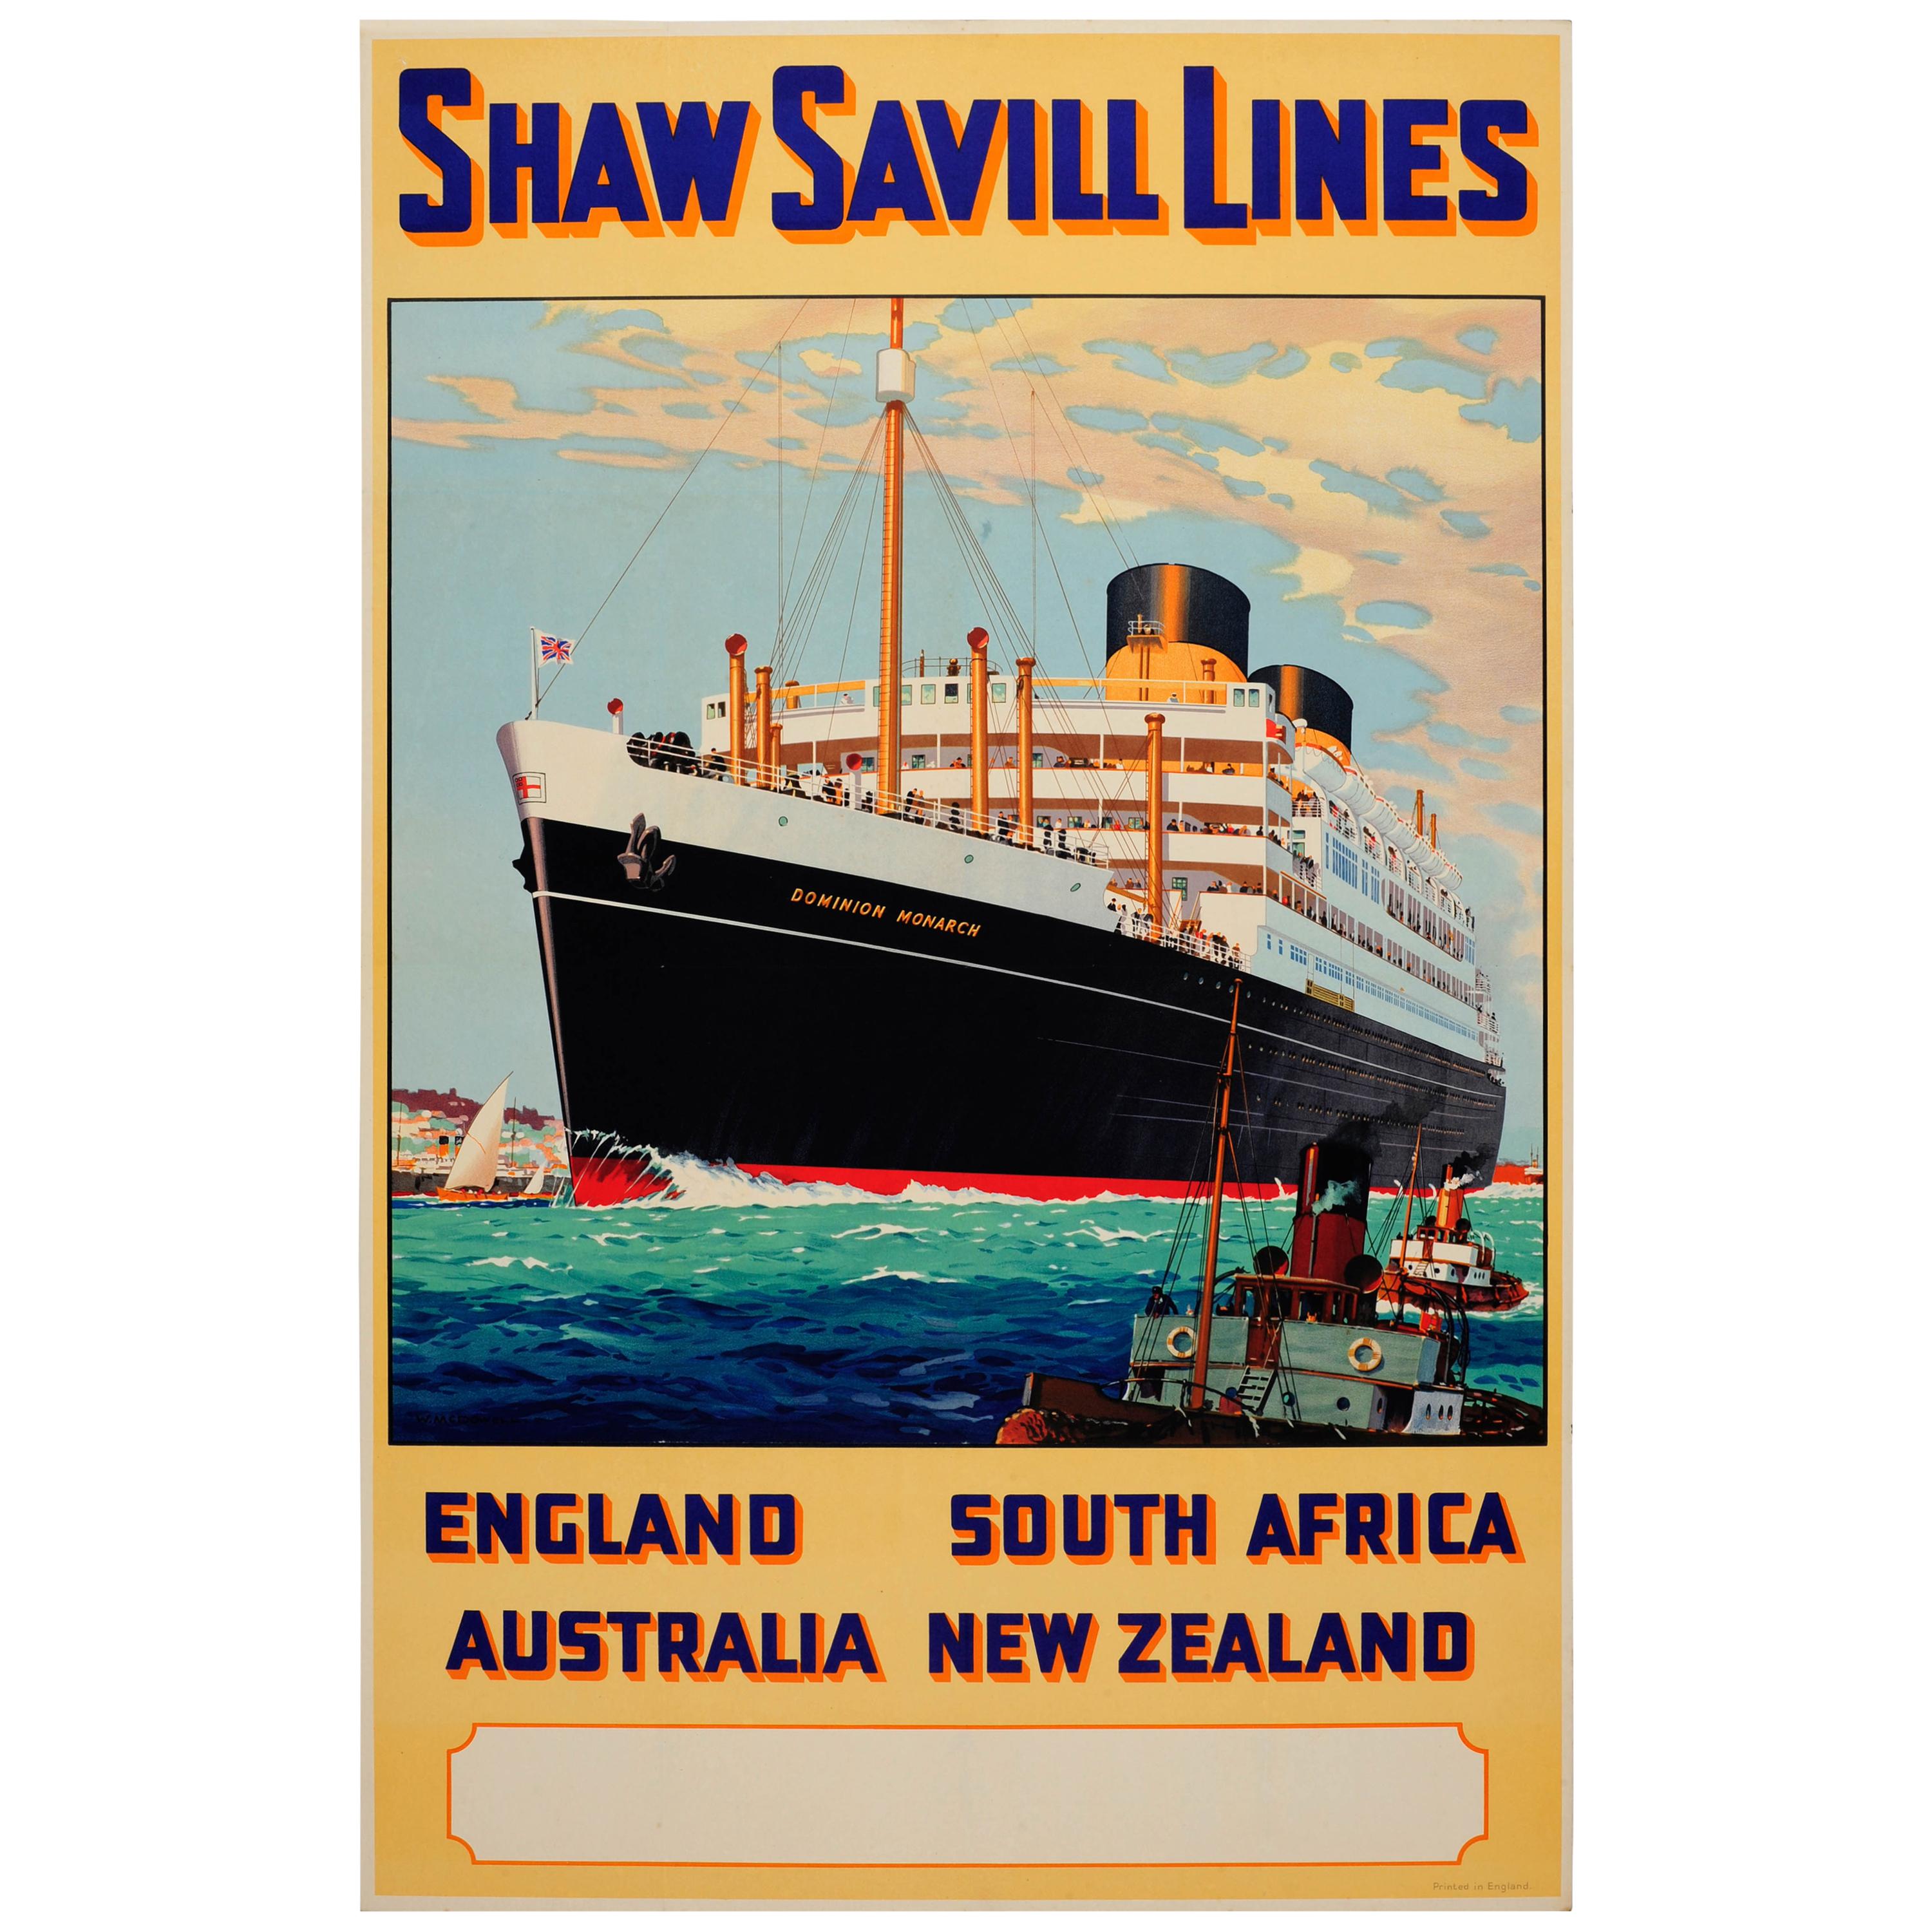 Original Vintage Shaw Savill Lines Cruise Liner Travel Poster Dominion Monarch